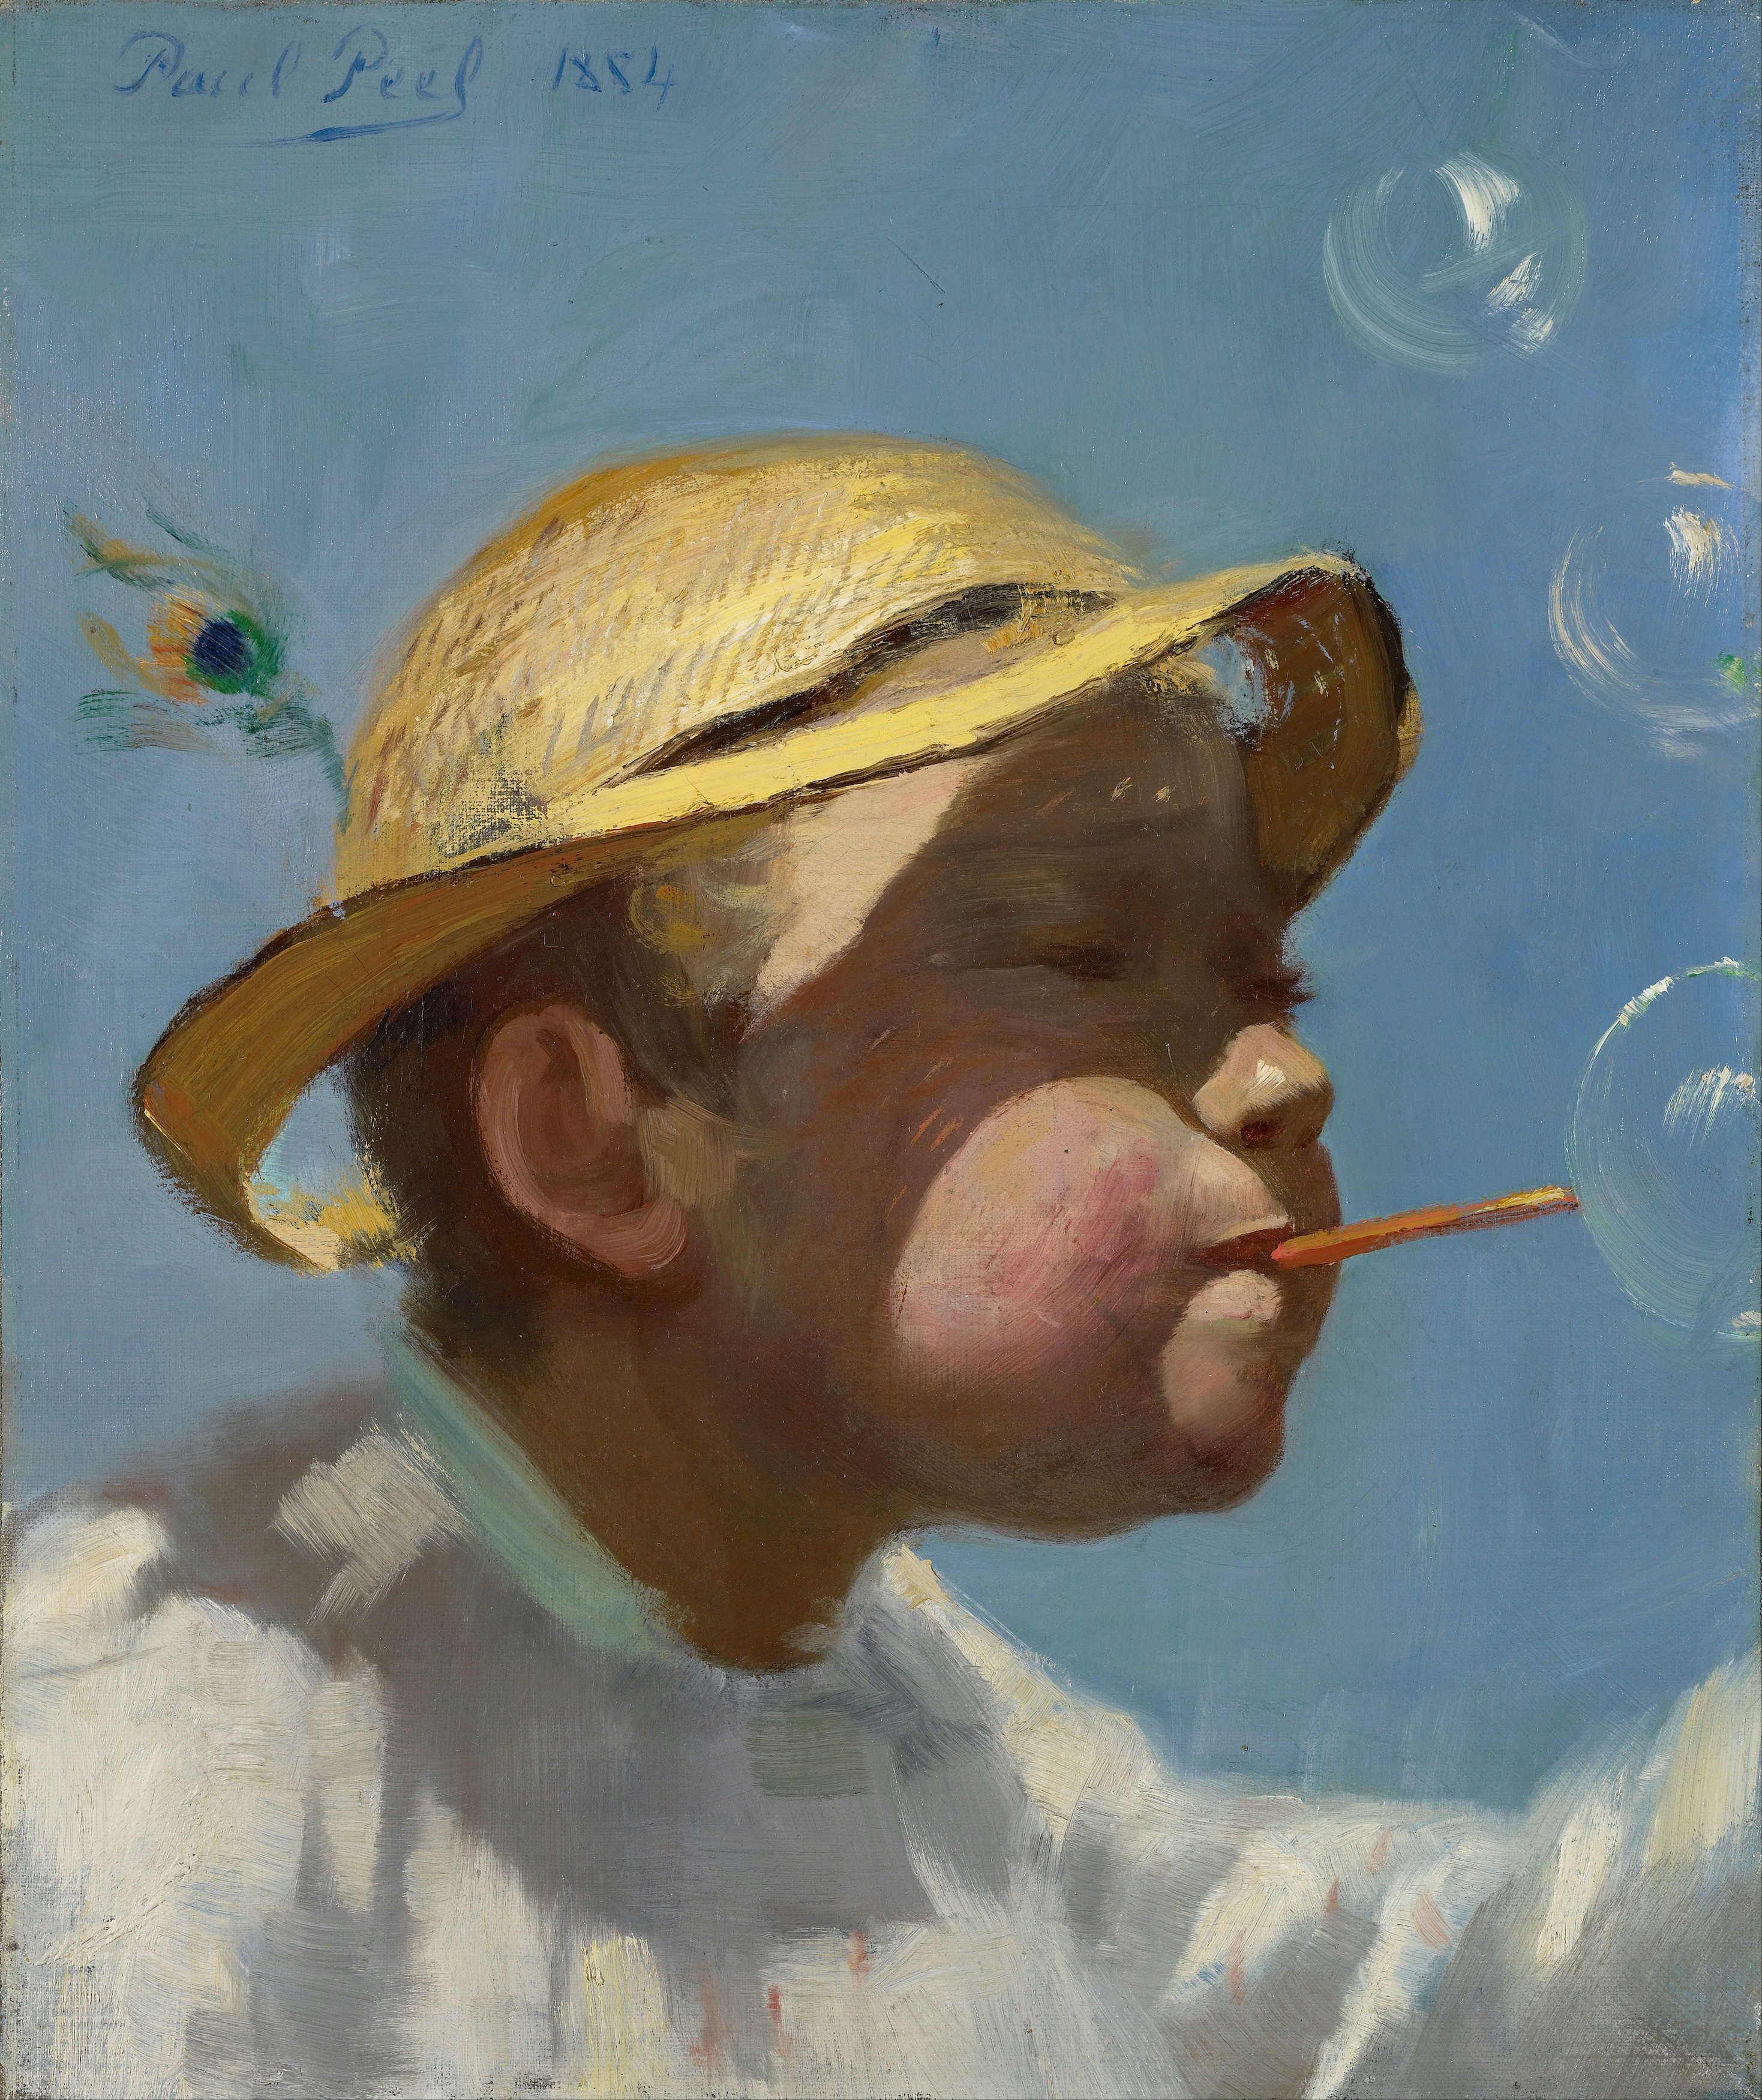 De bellenblazende jongen by Paul Peel - 1884 - 35,9 x 43,2 cm 